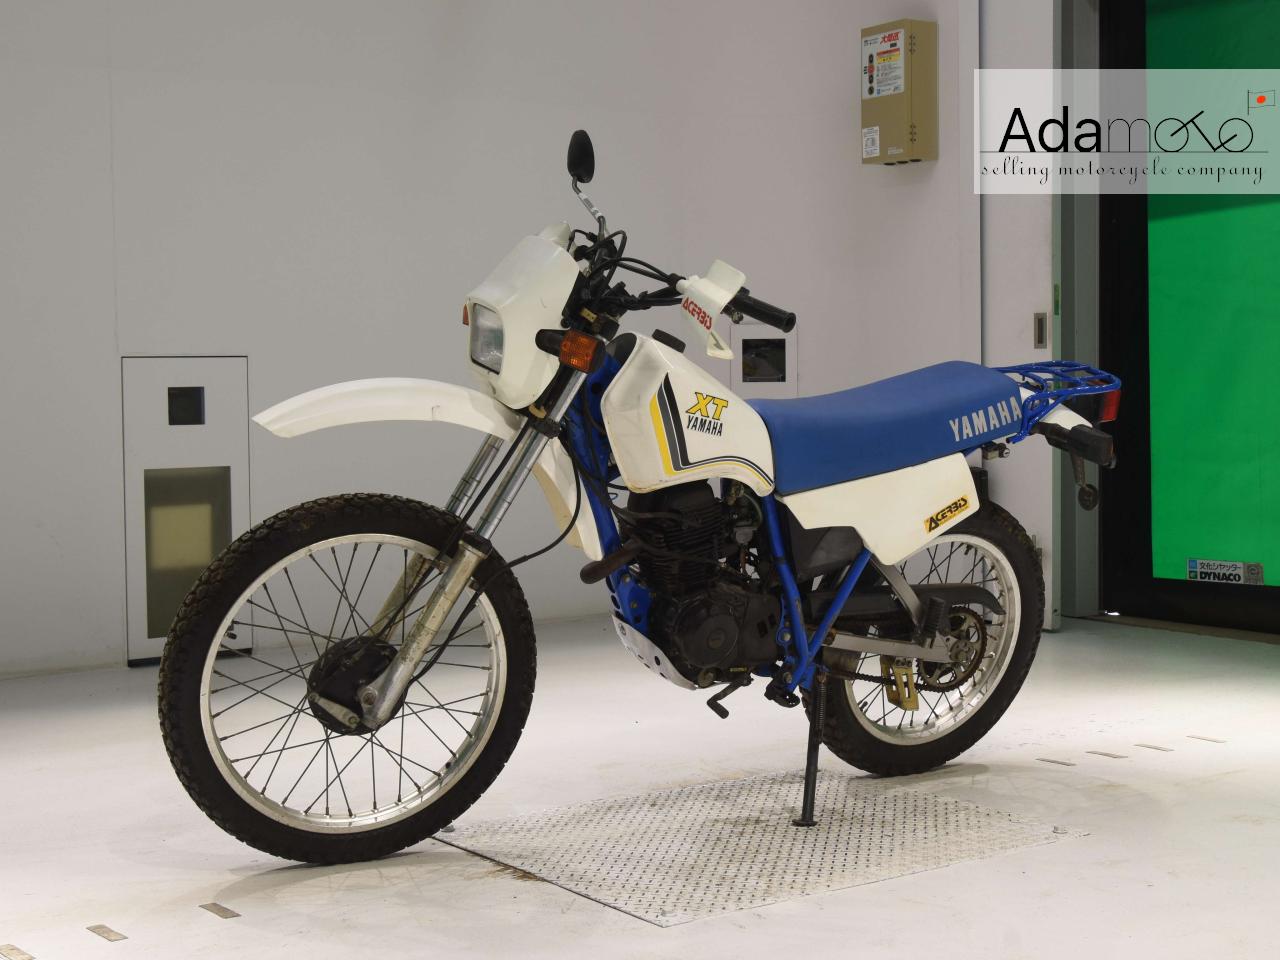 Yamaha XT200 - Adamoto - Motorcycles from Japan